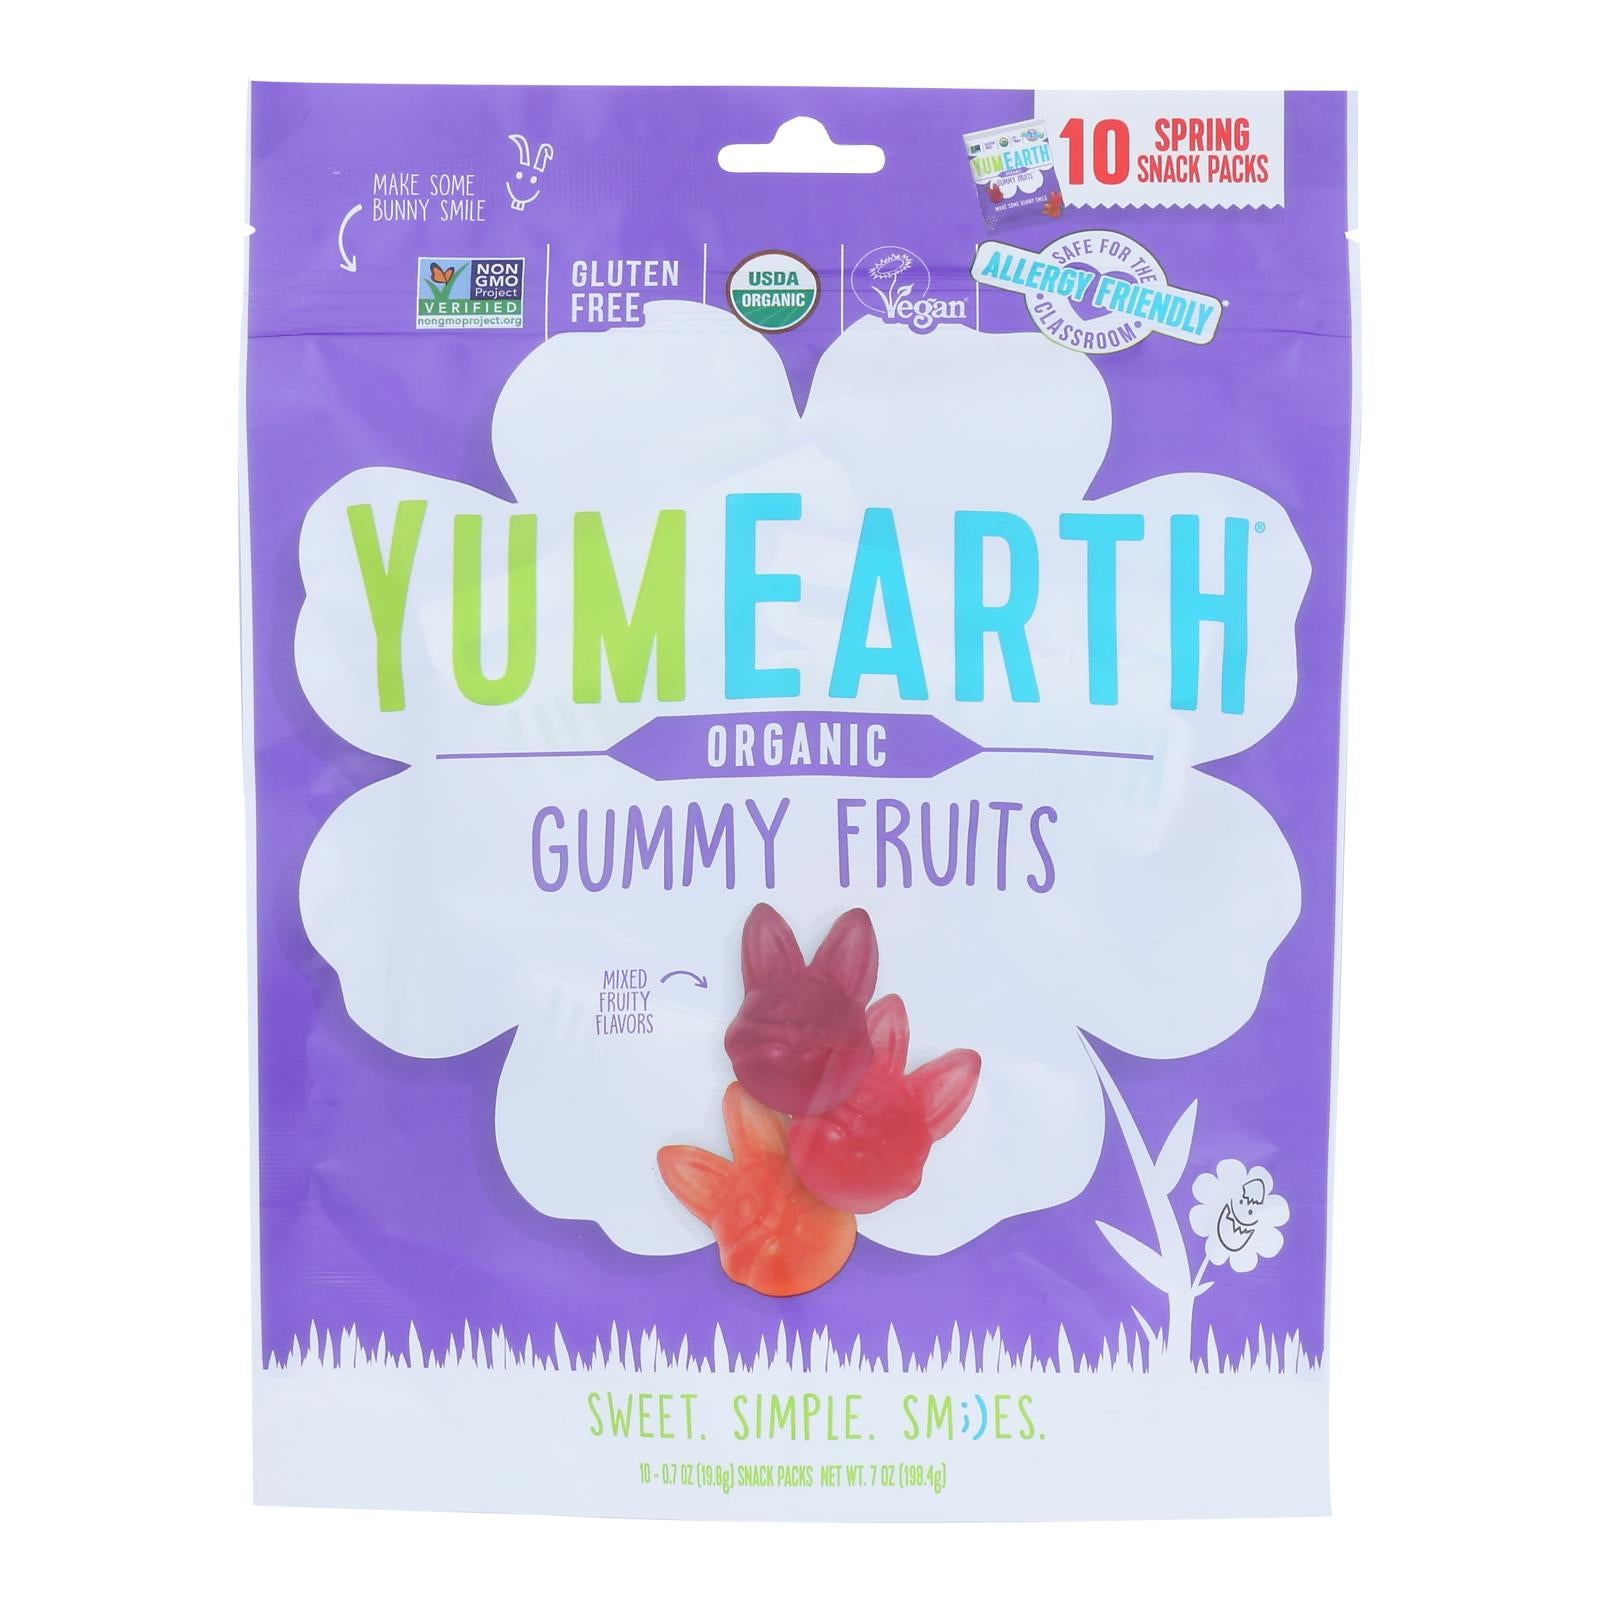 Yumearth - Gummy Fruit Easter - Case of 18 - 7 OZ